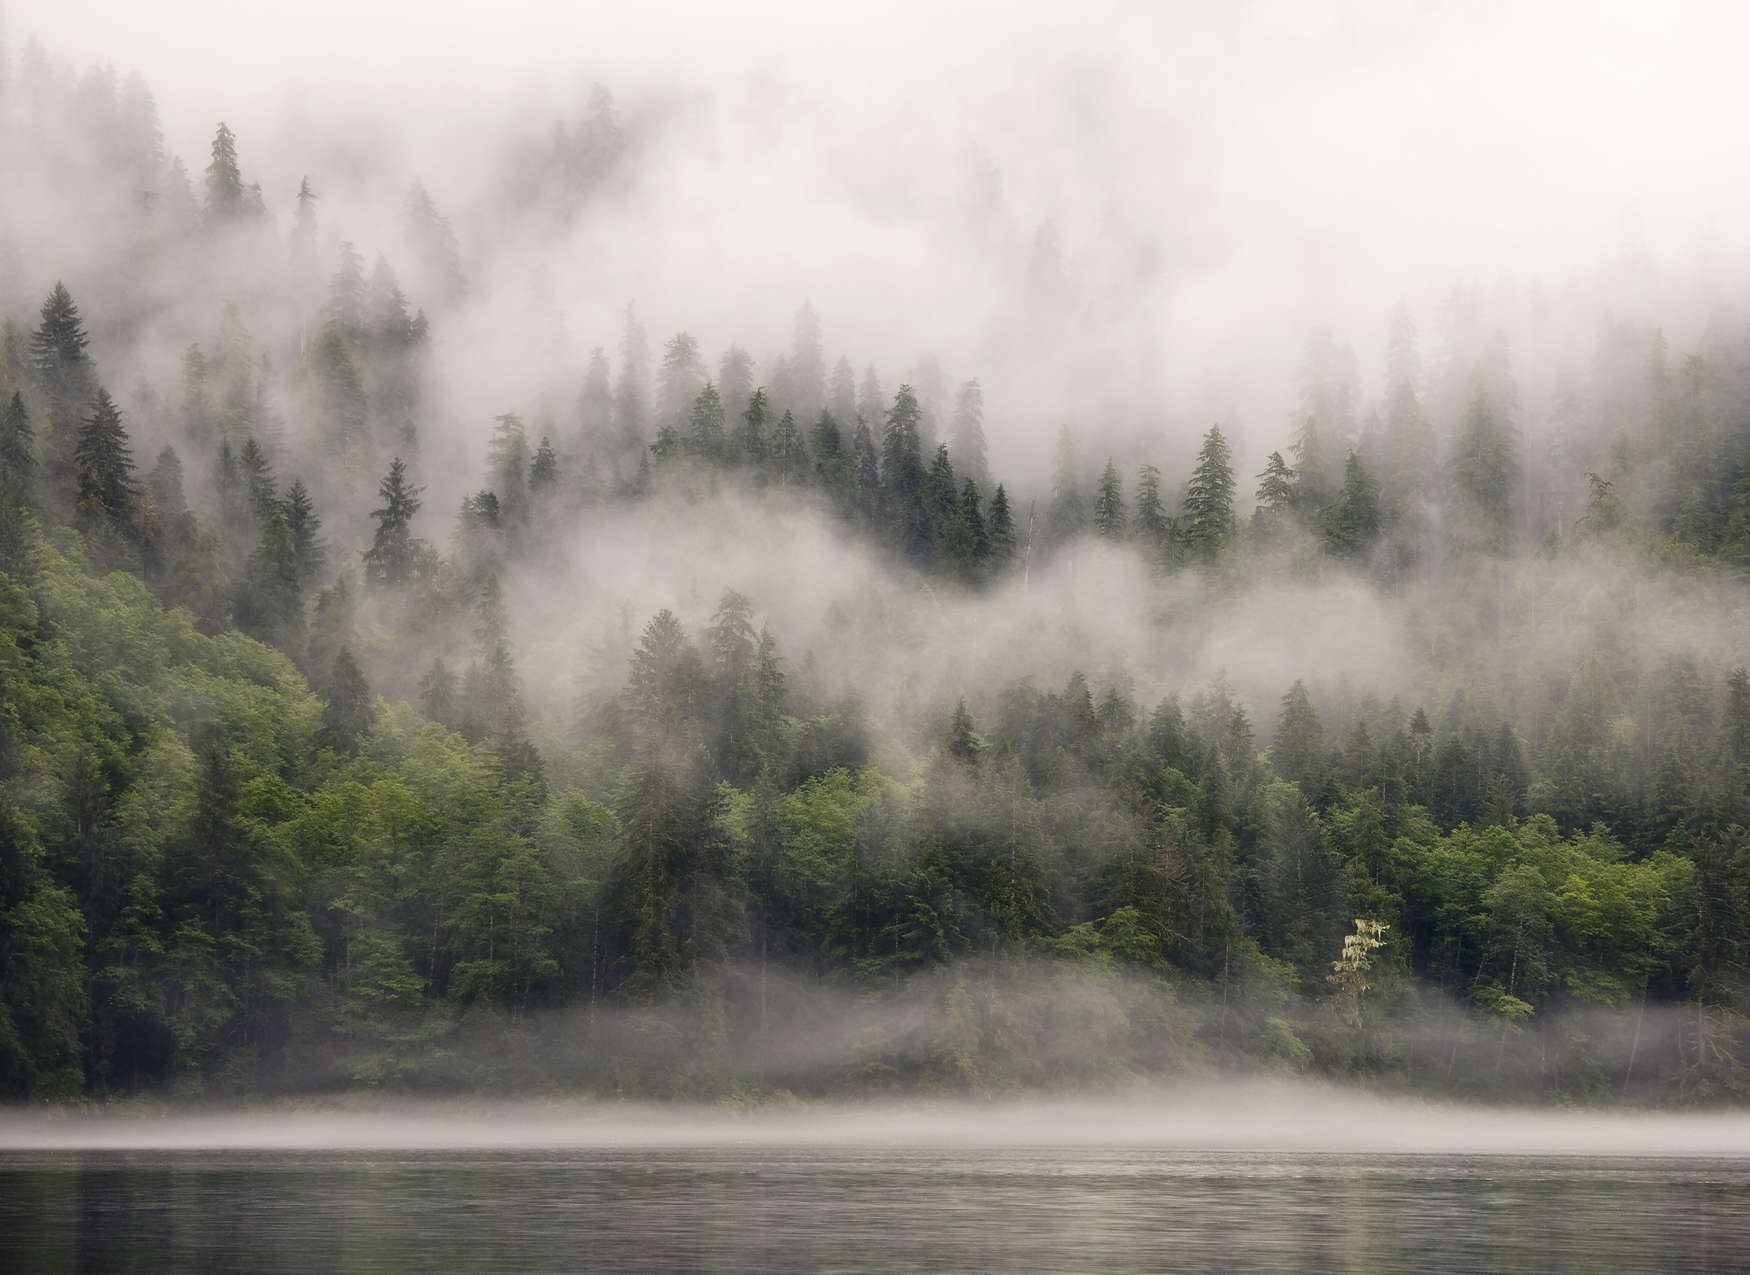             Fotomurali foresta nebbiosa sul lago - Verde, Bianco, Beige
        